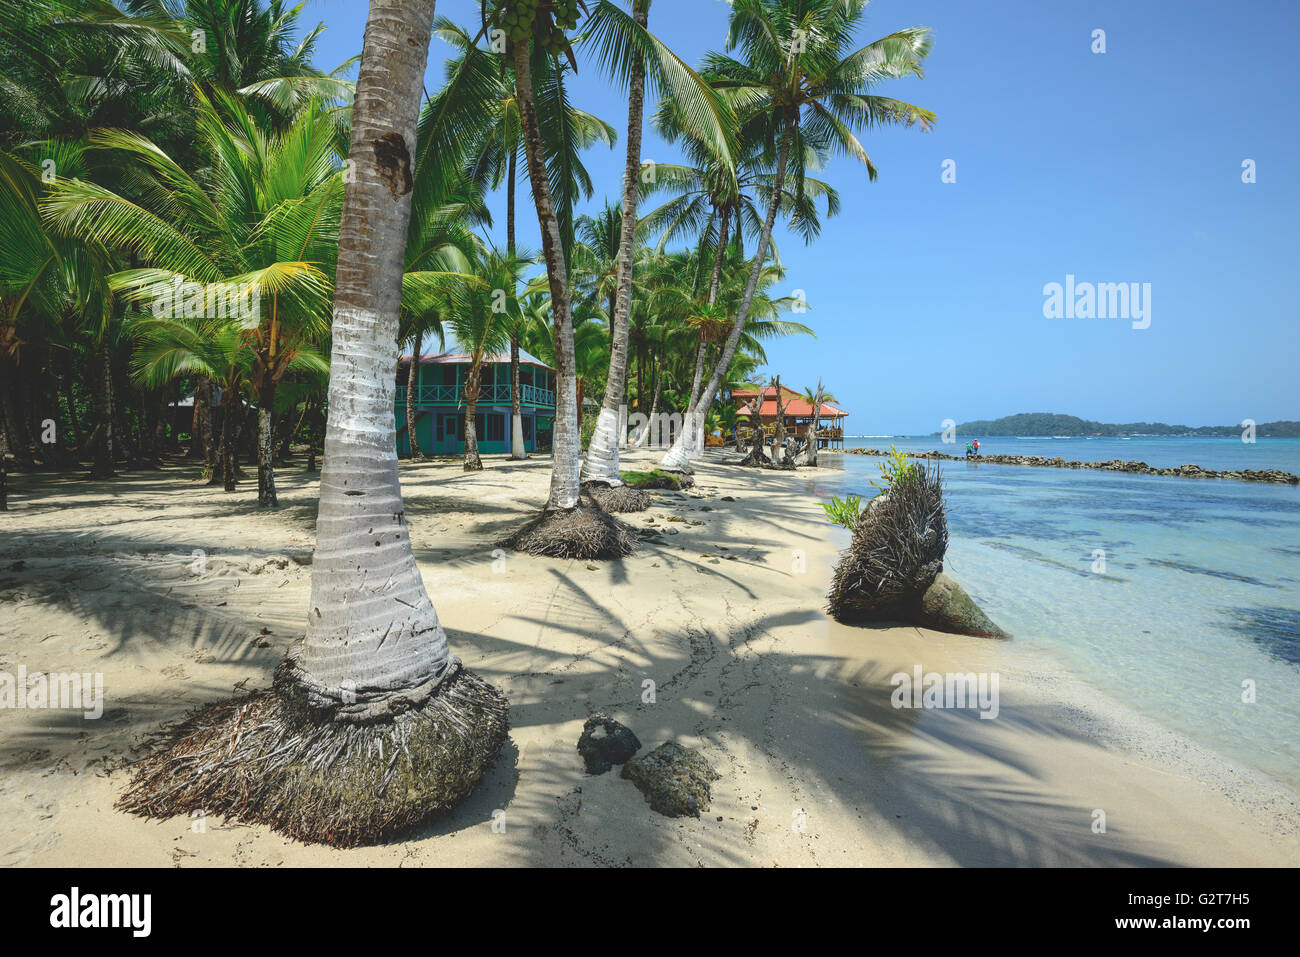 Palm trees on Carenero island in Bocas Del Toro, Panama Stock Photo - Alamy